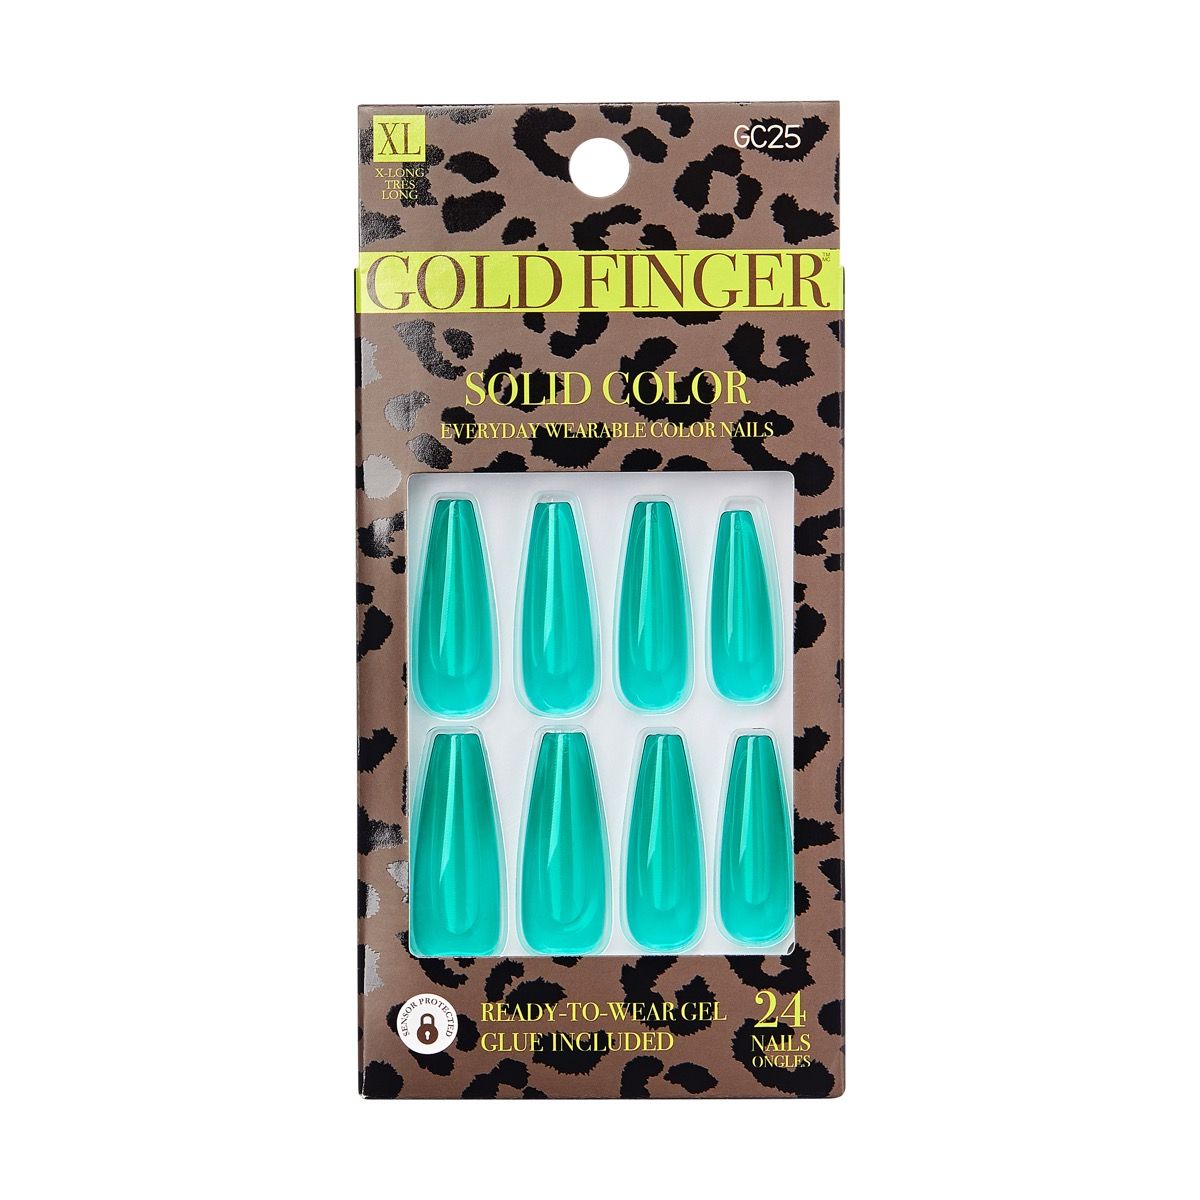 KISS Gold Finger Solid Color 24 Nails - #GC25(DC)